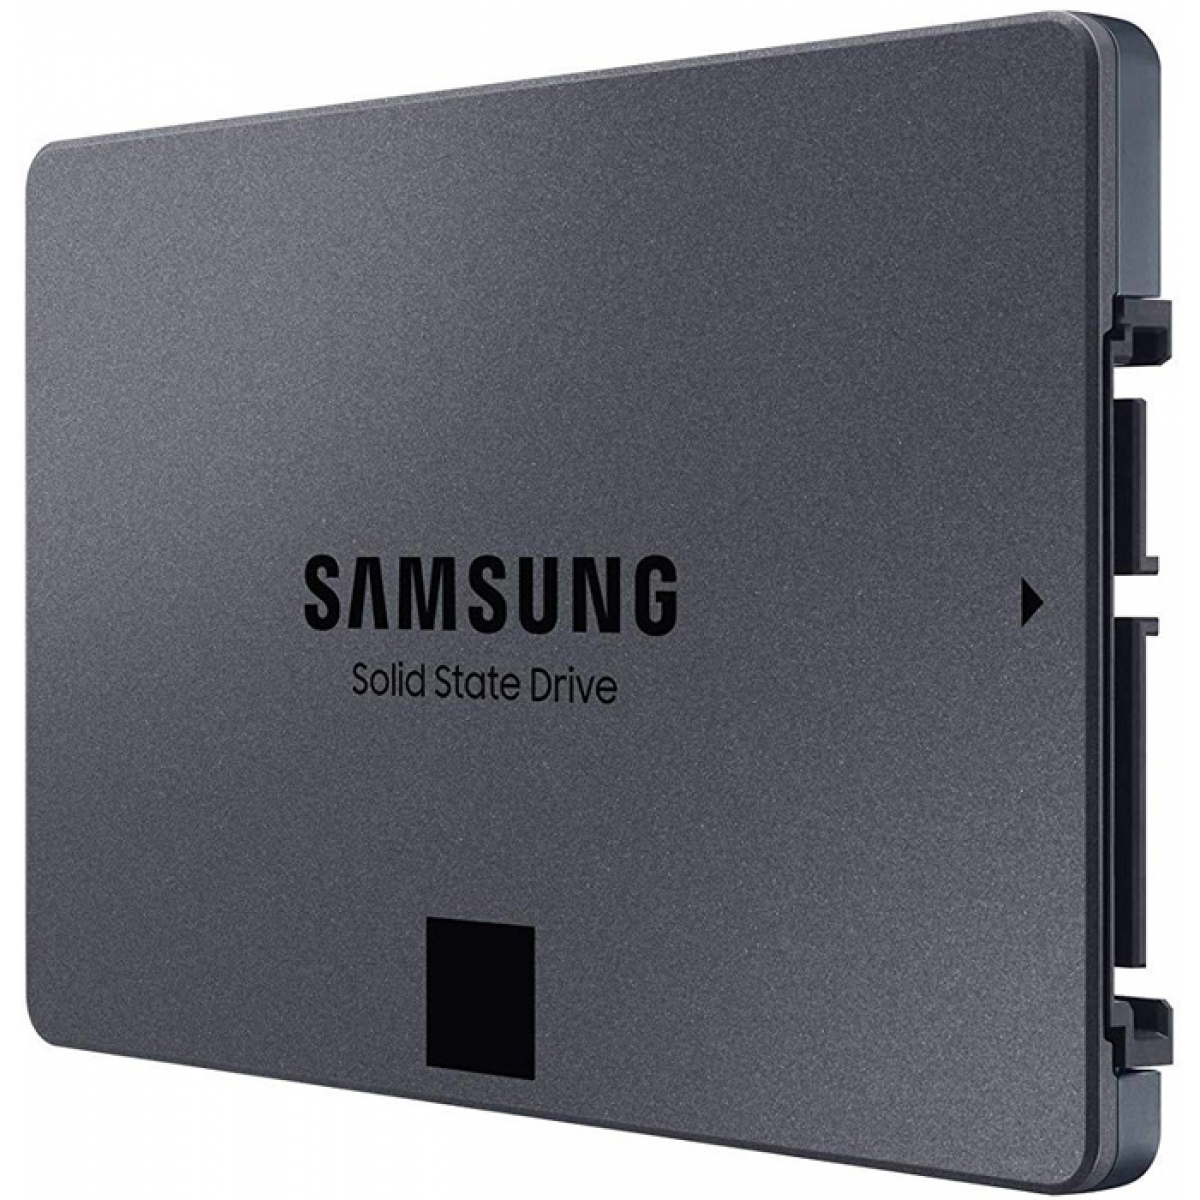 SSD Samsung 860 QVO, 4TB, Sata III, Leitura 550MBs e Gravação 520MBs, MZ-76Q4T0B/AM